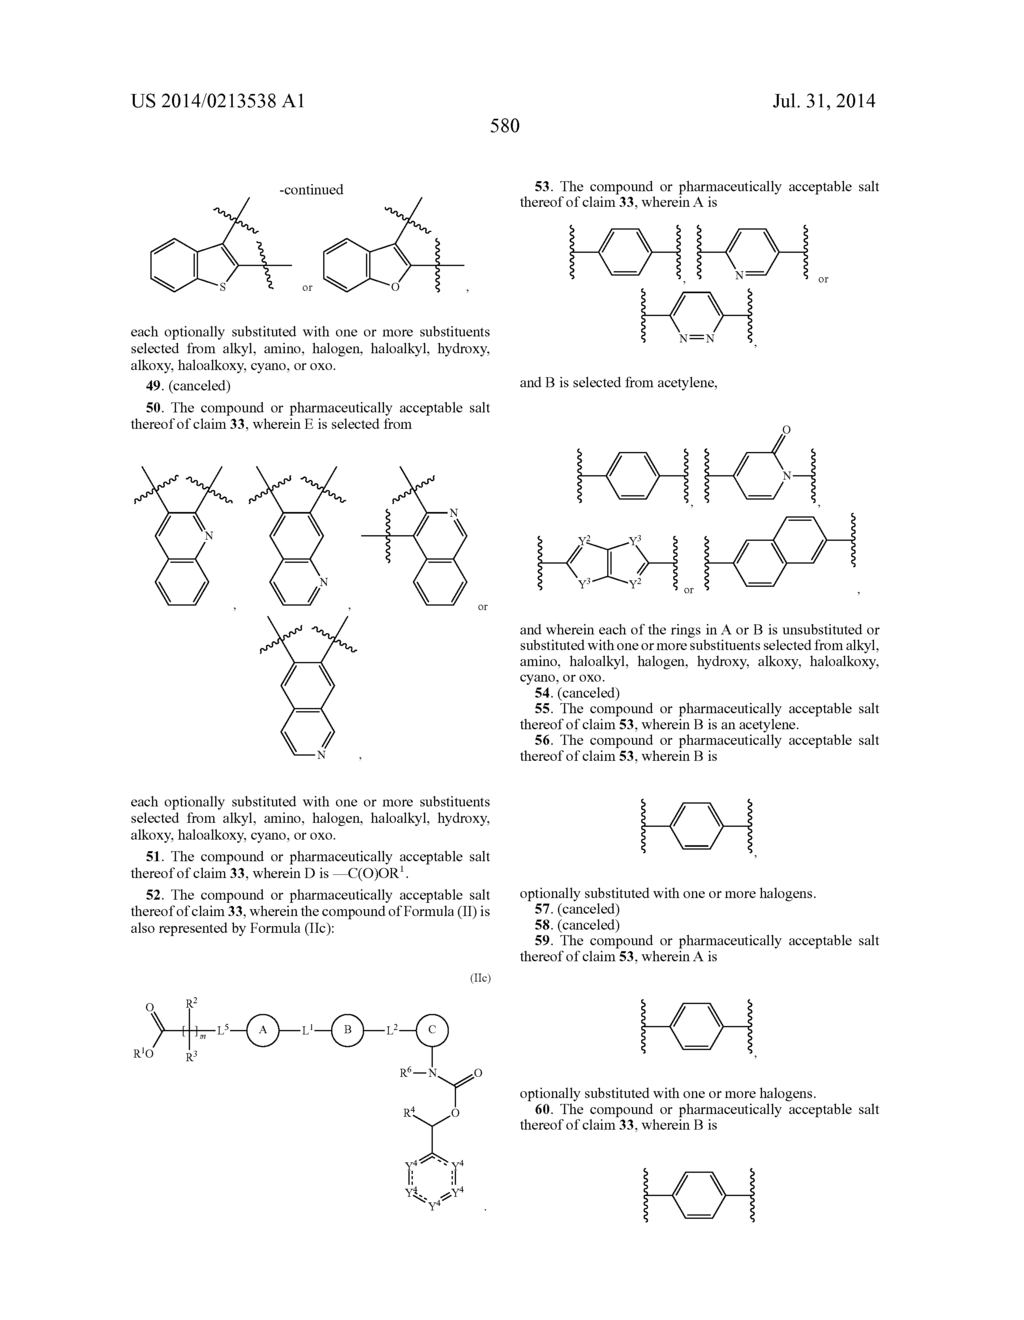 LYSOPHOSPHATIDIC ACID RECEPTOR ANTAGONISTS - diagram, schematic, and image 581